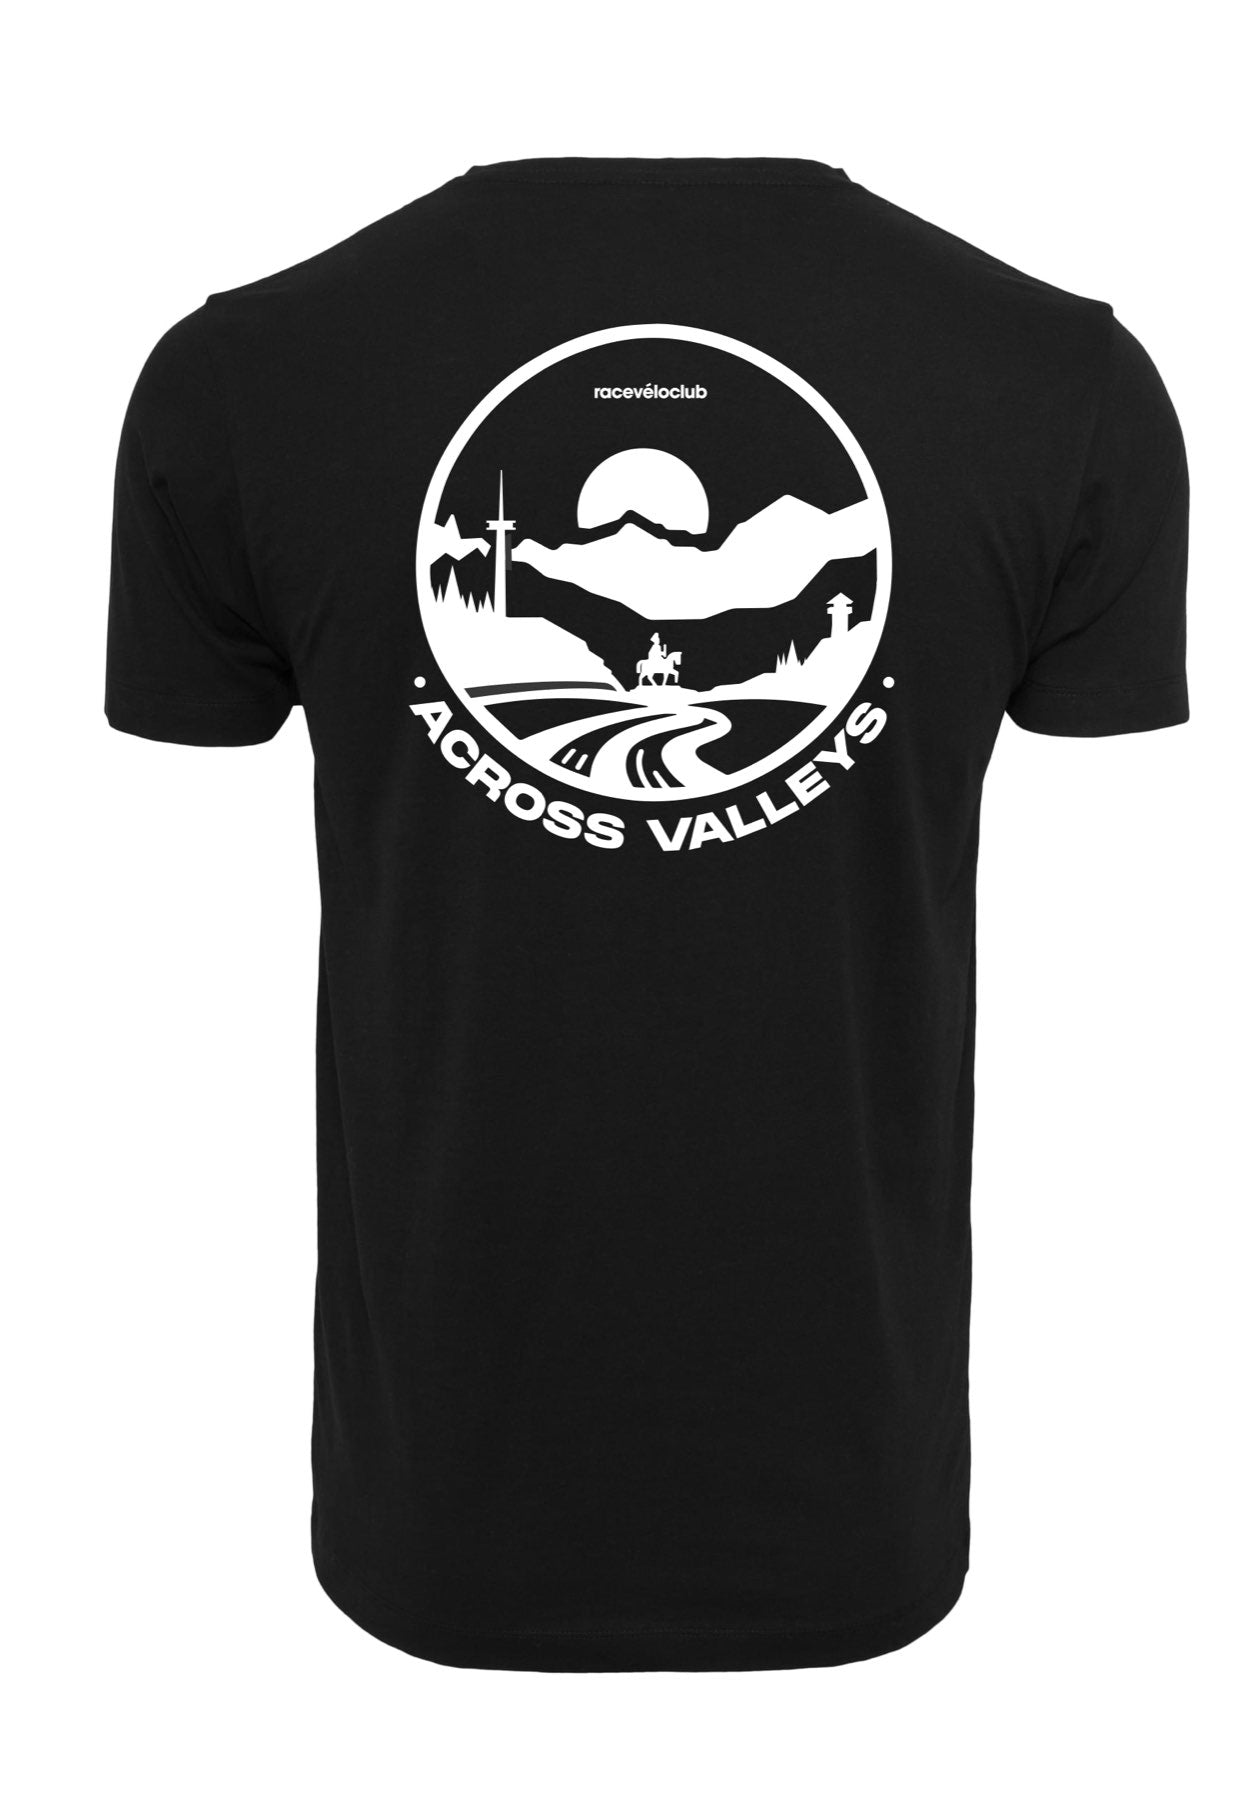 RVC Across Valleys + Event T-Shirt